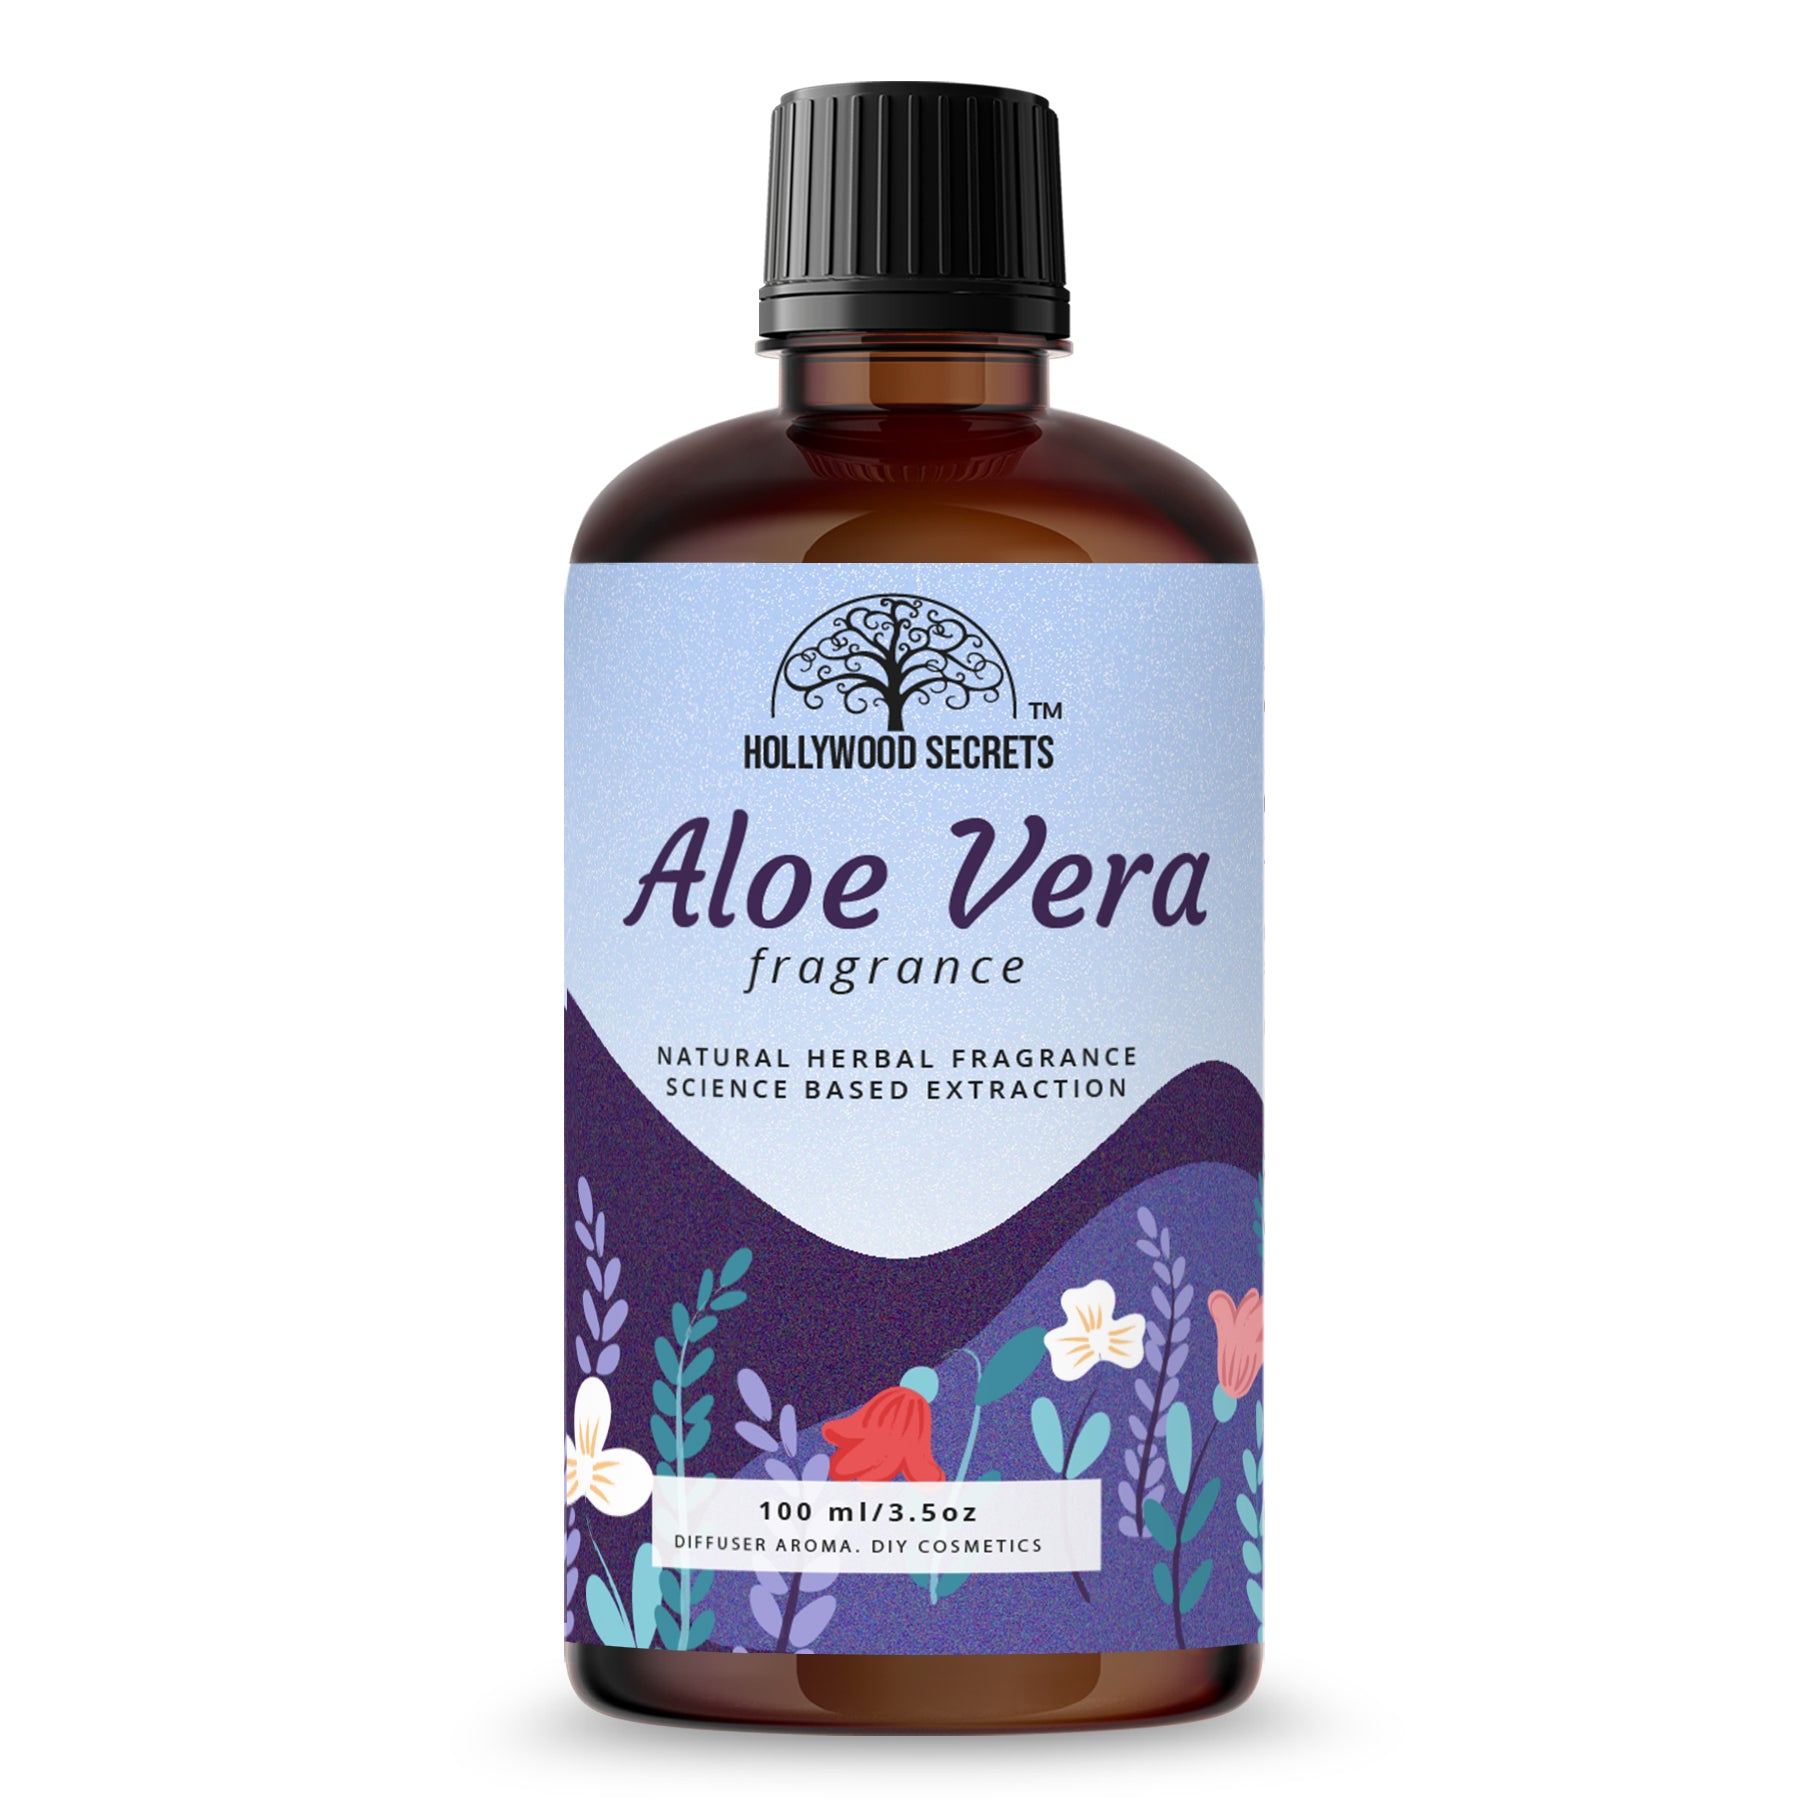 Pure Aloe Vera Fragrance Liquid For Diffuser And Cosmetic 100ml Hollywood Secrets